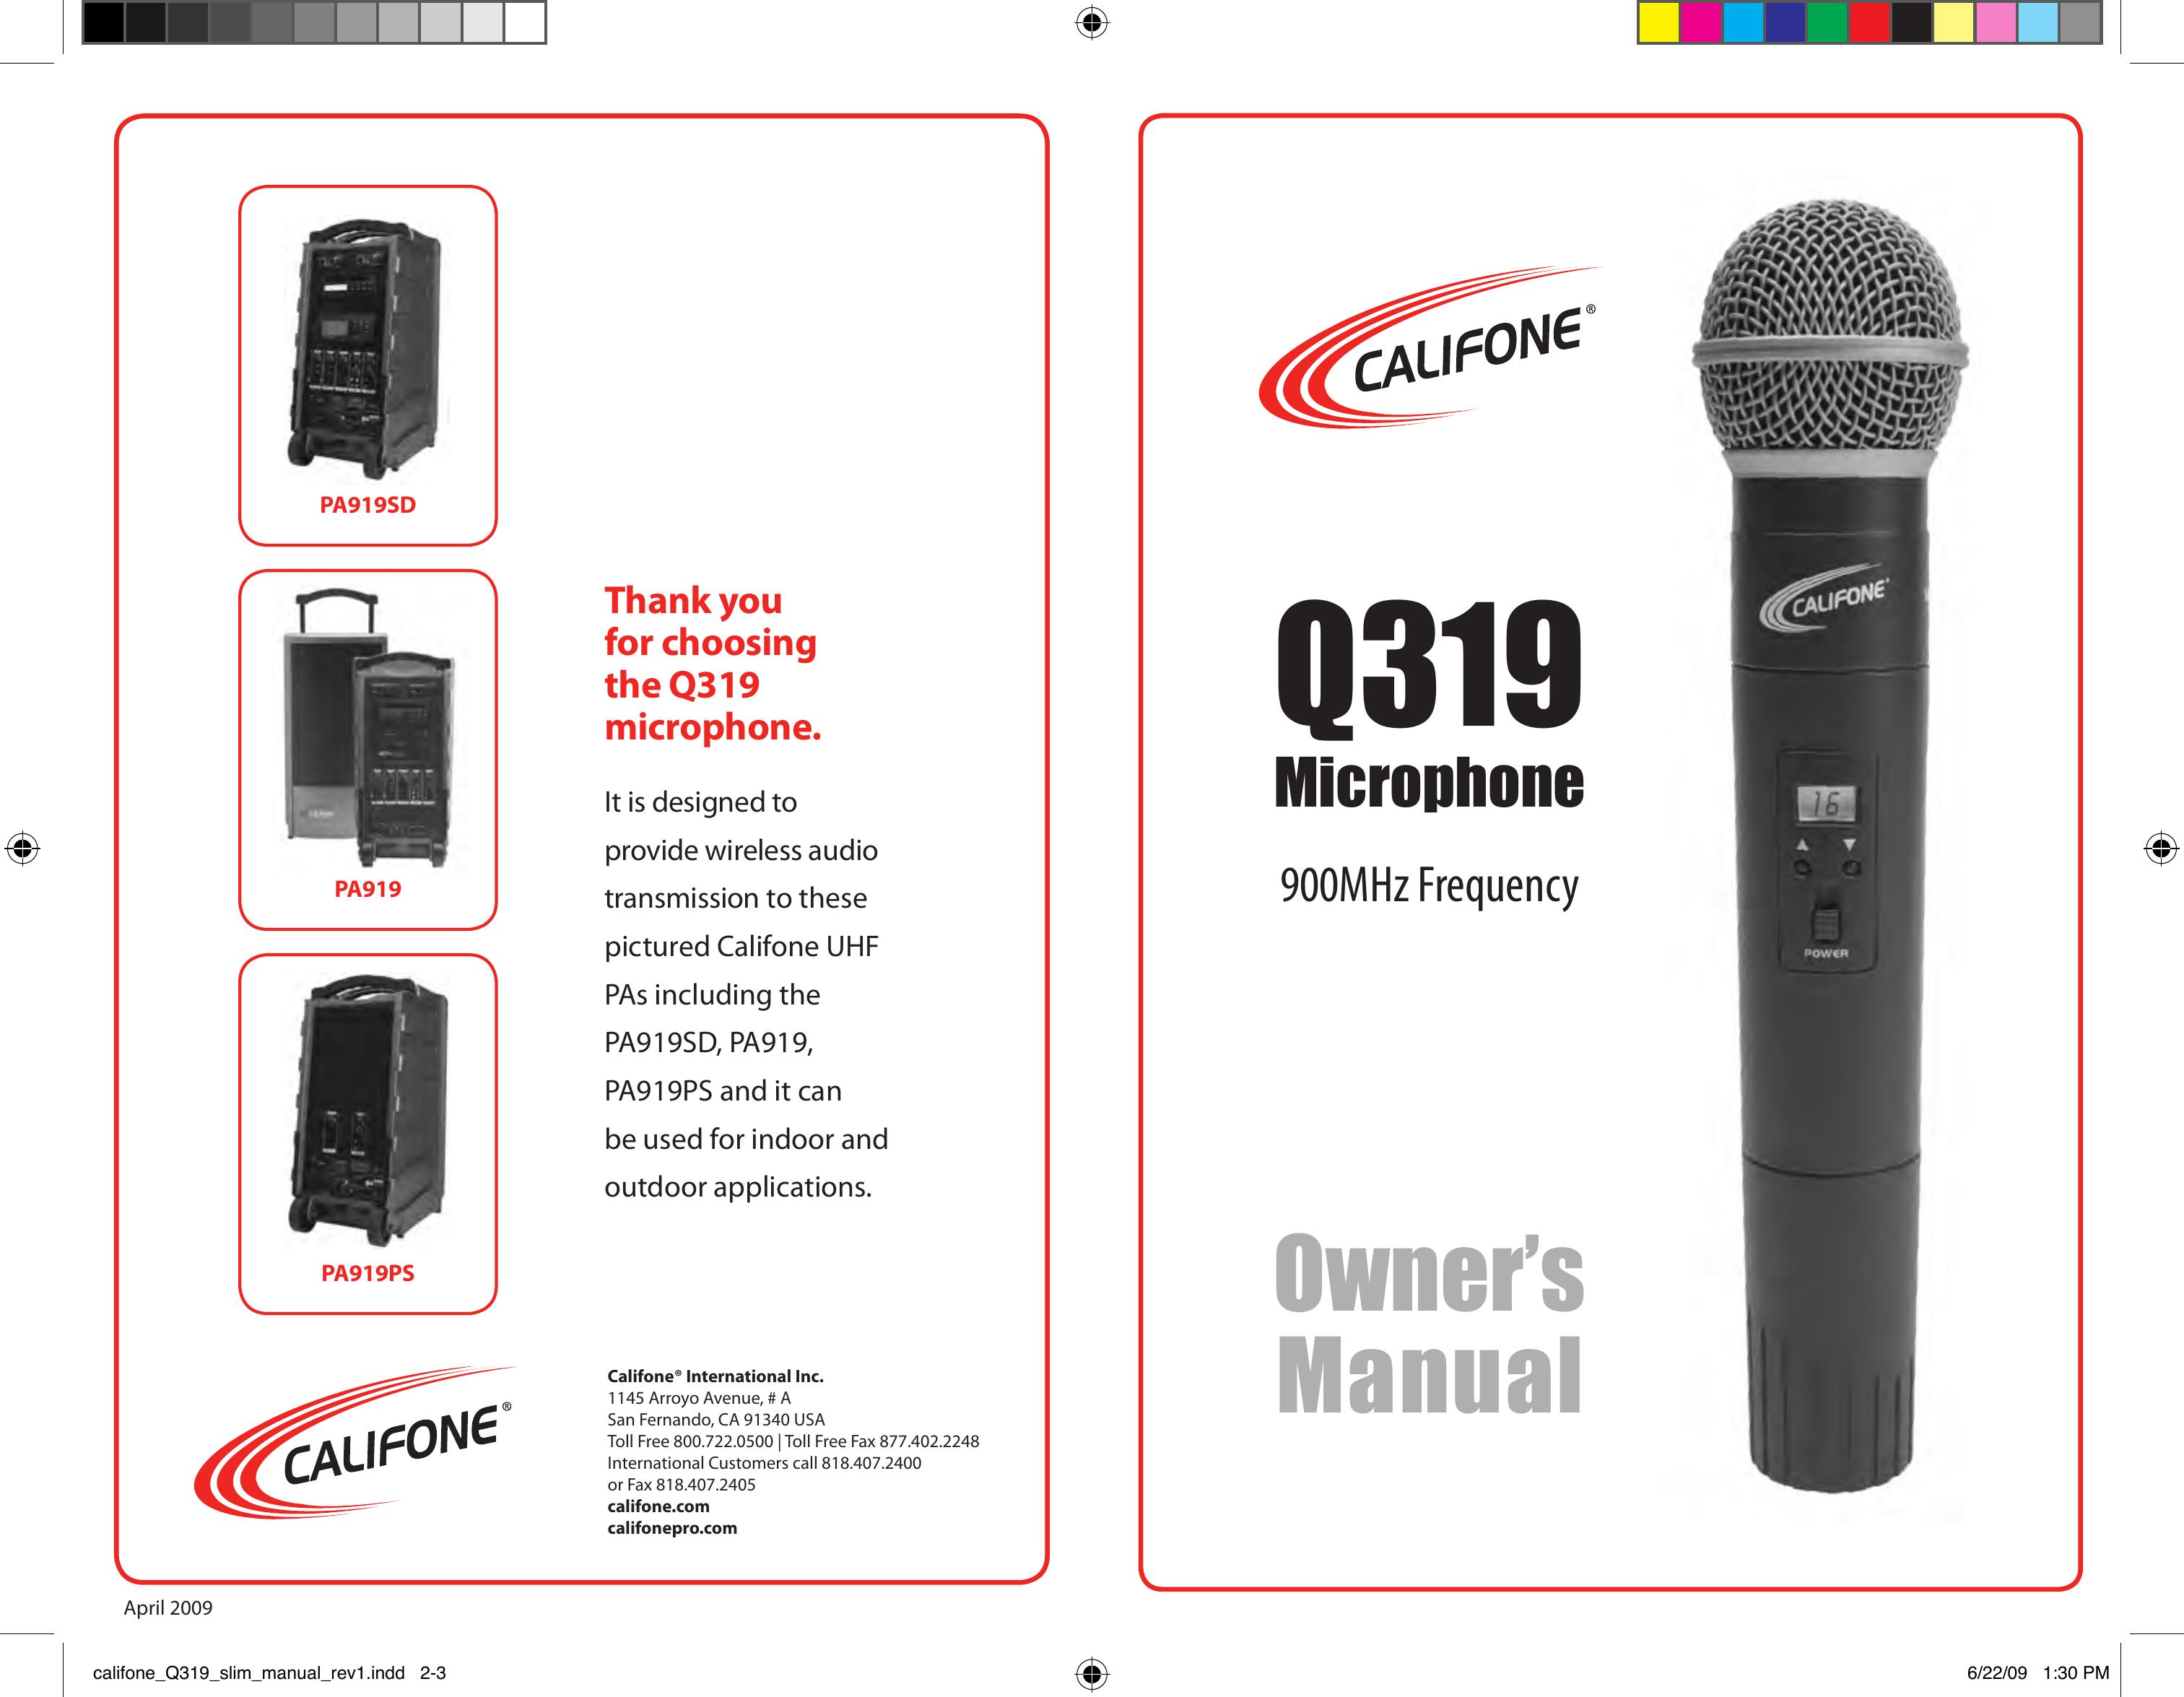 Califone Q319 Microphone User Manual